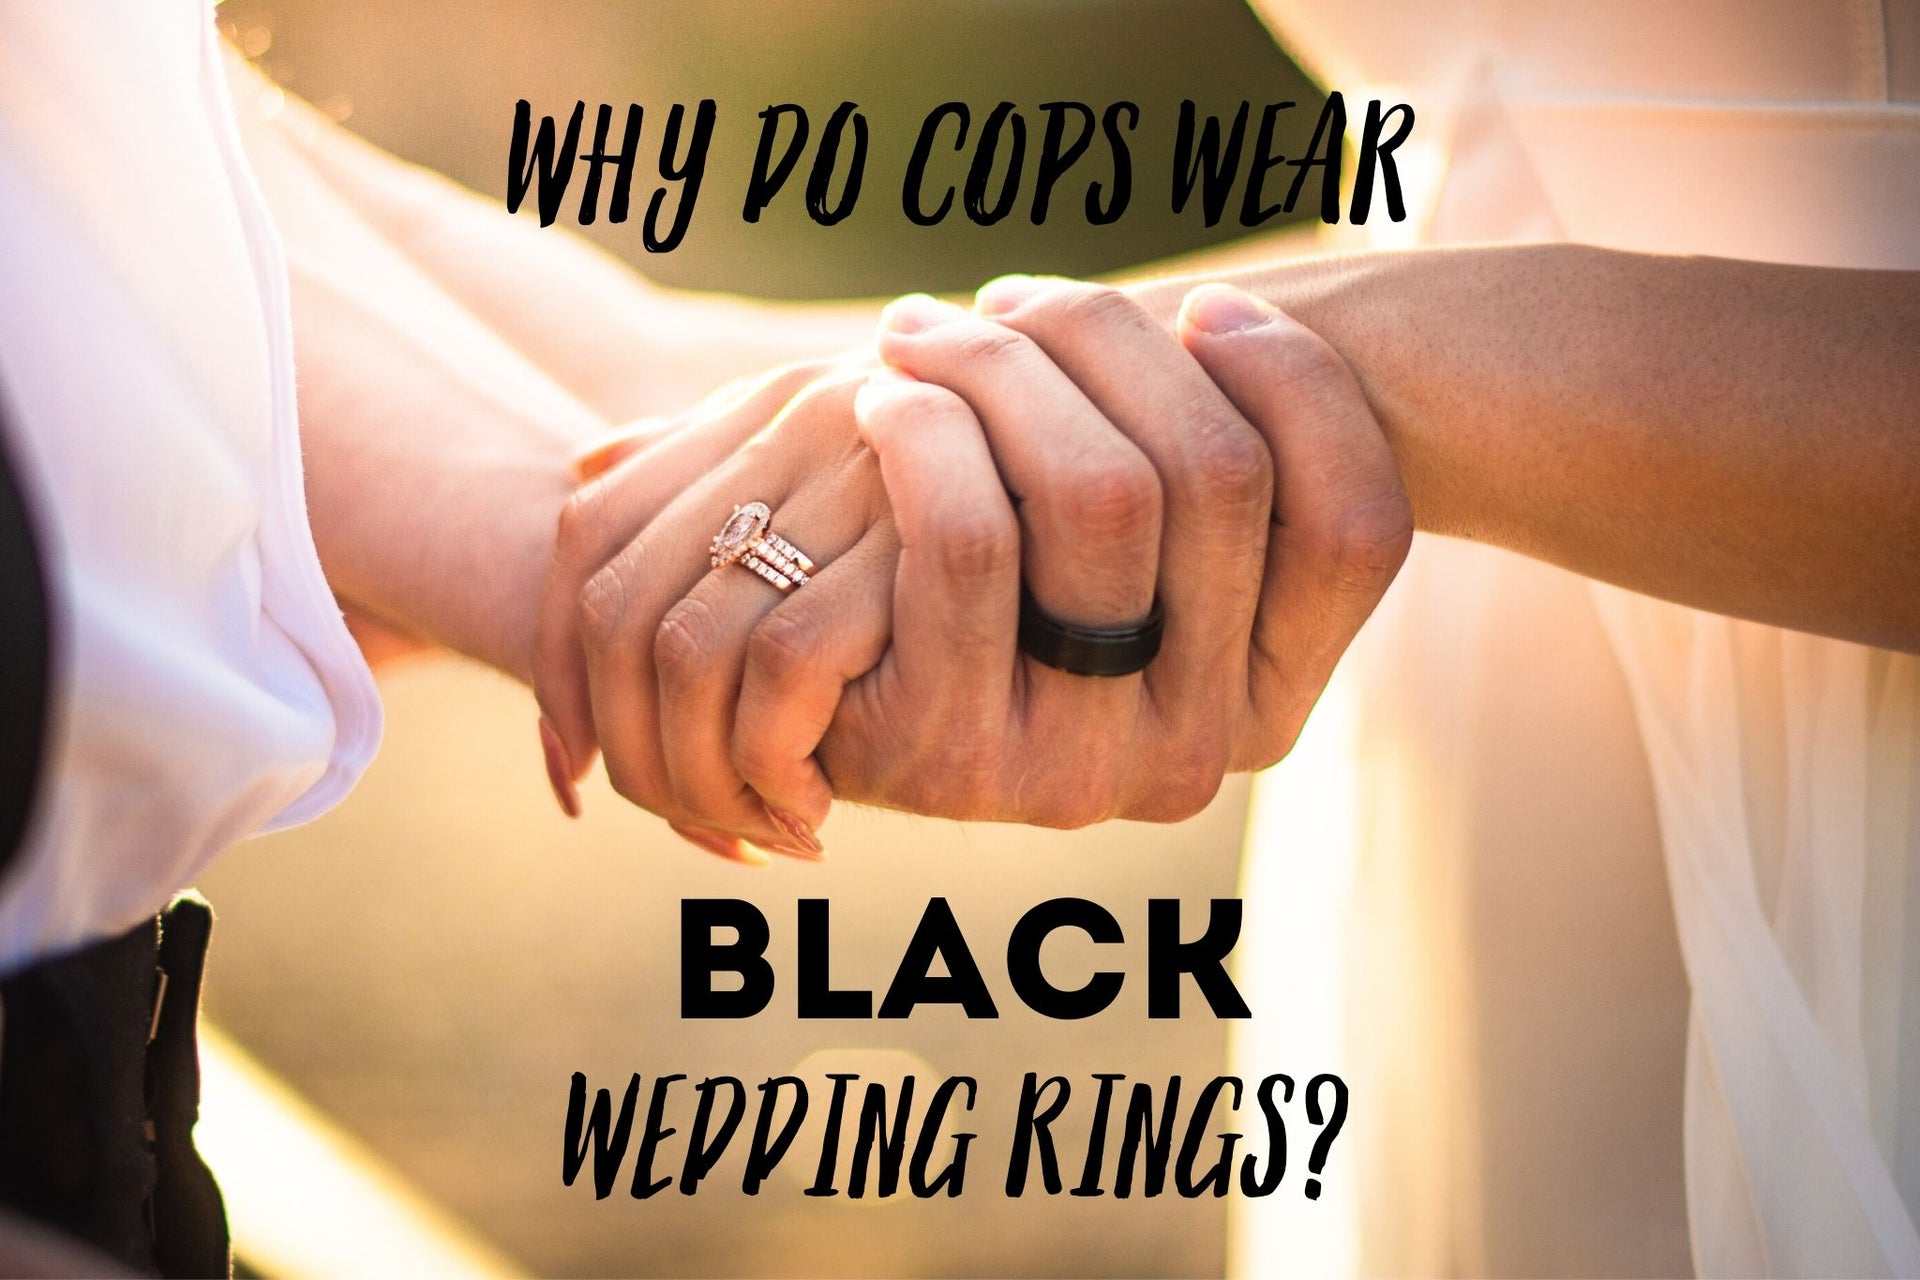 Why Do Cops Wear Black Wedding Rings?